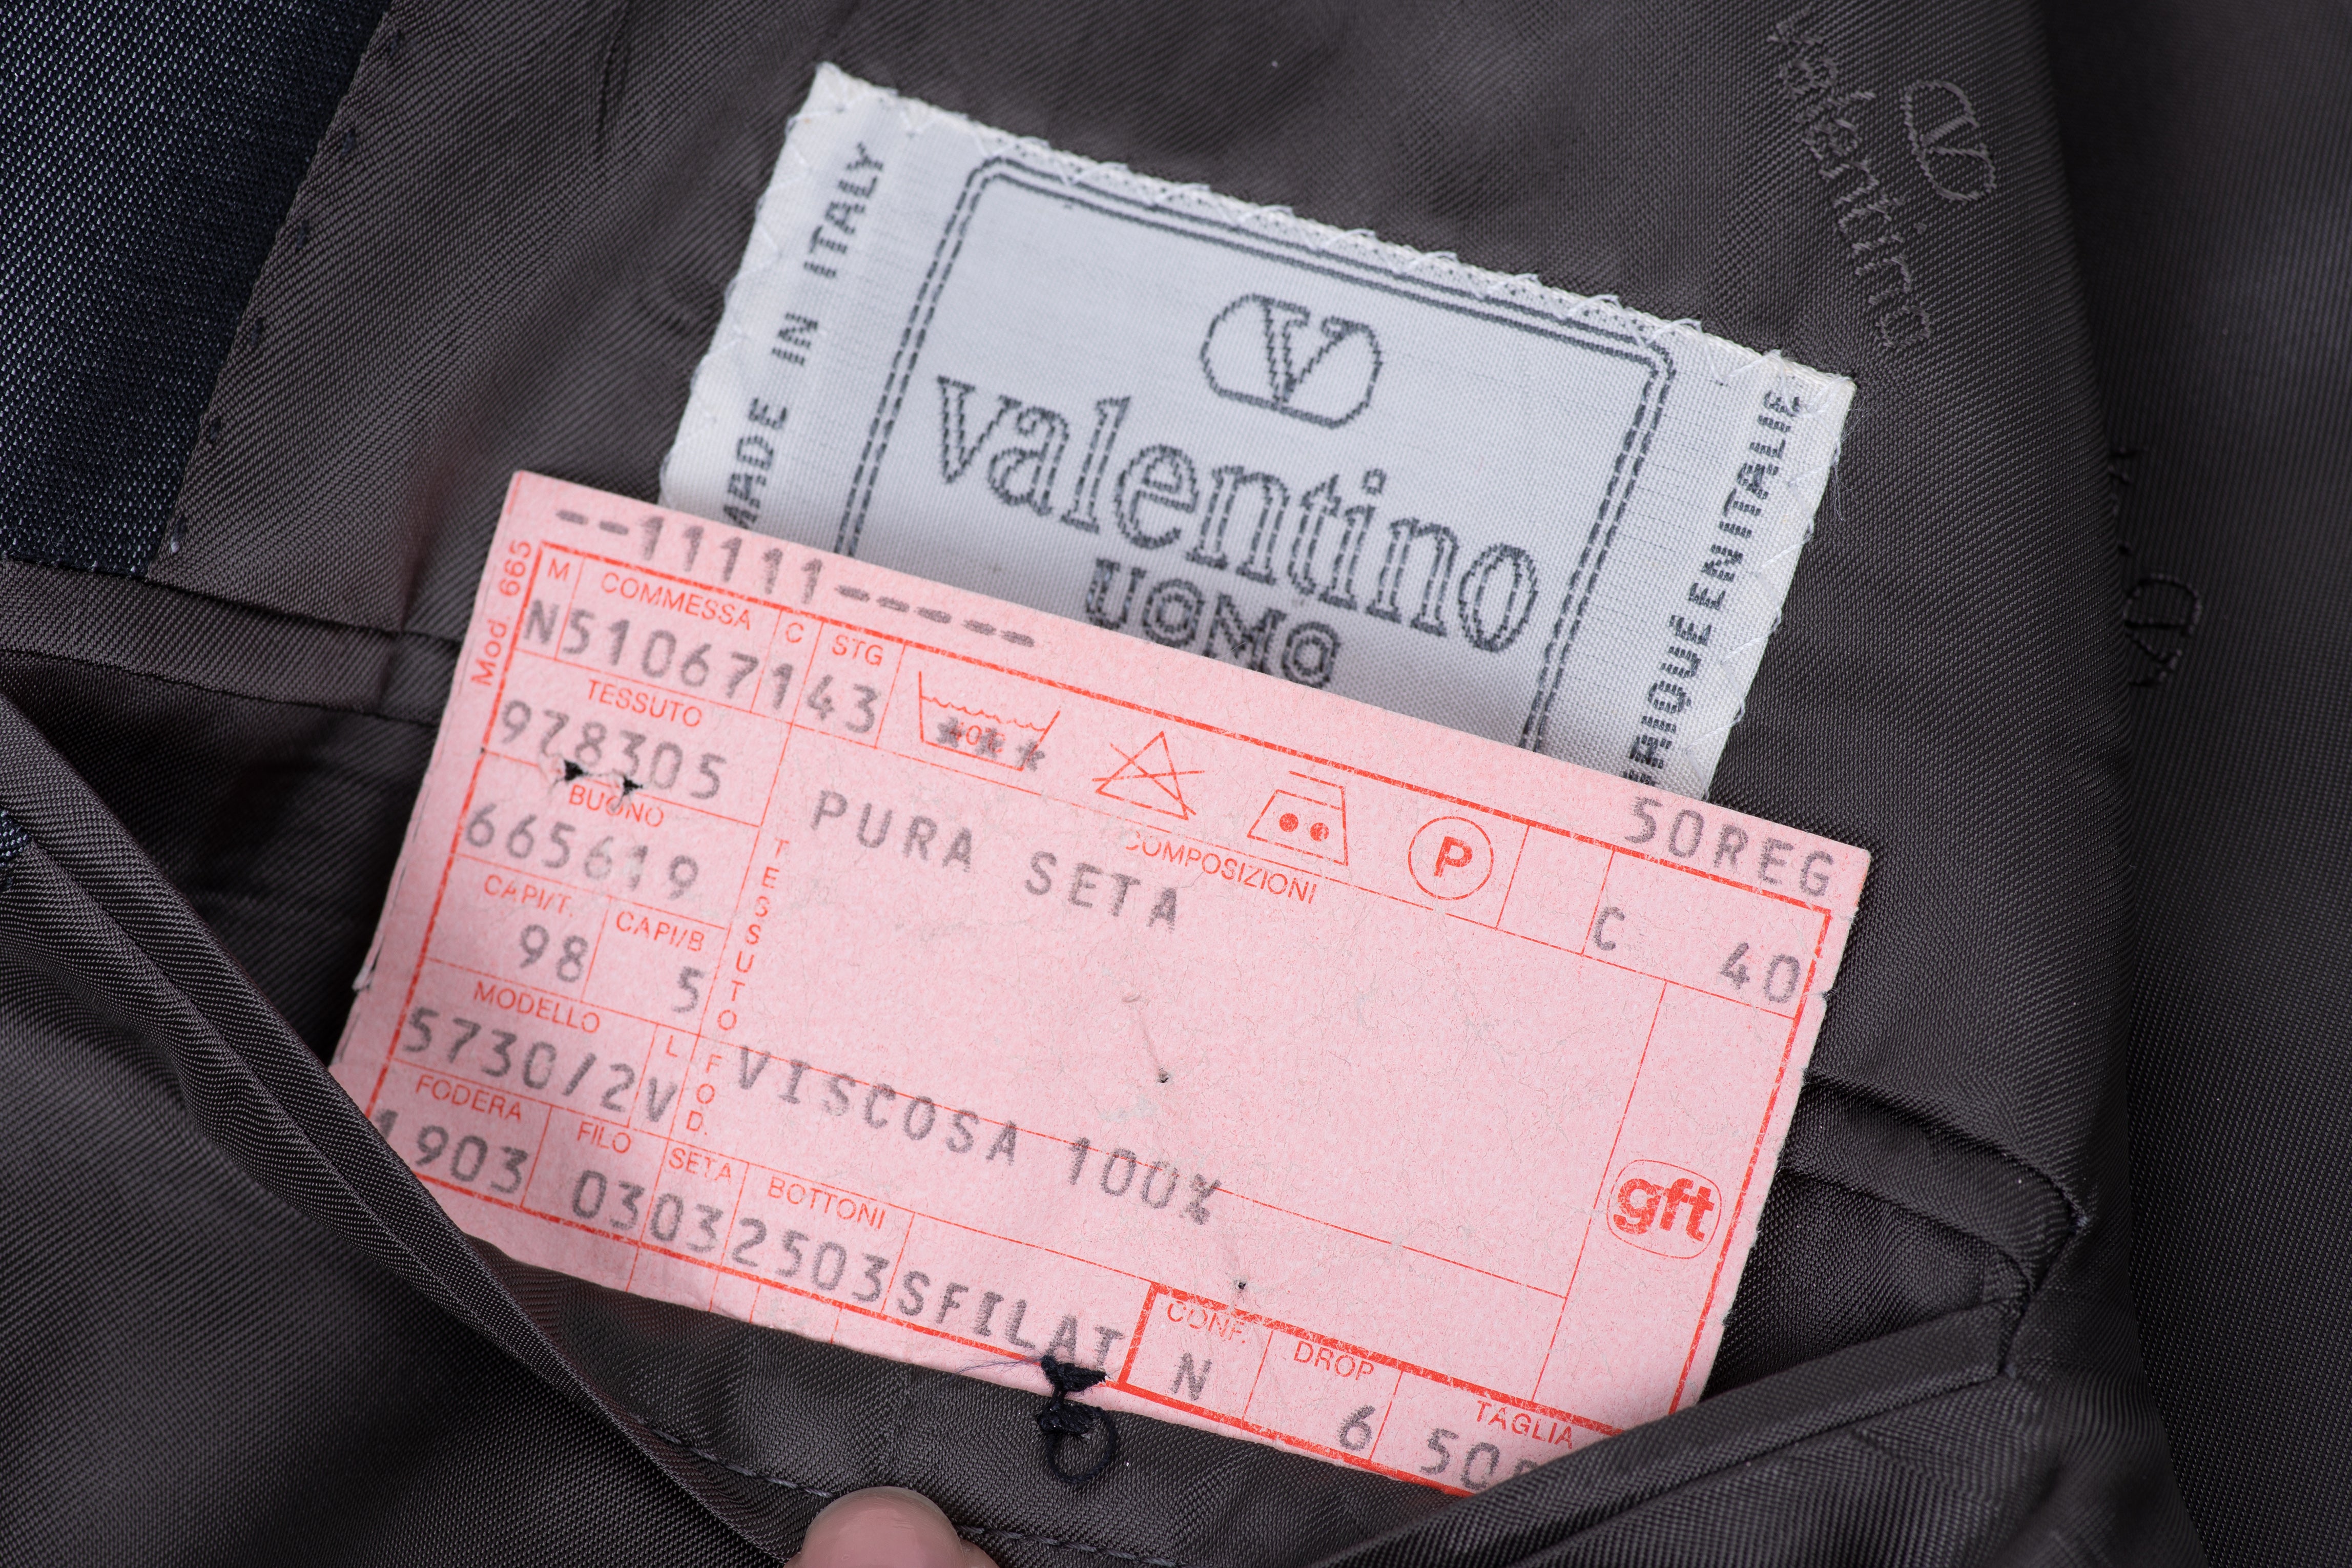 Valentino Single Breasted Grey Silk Blazer Jacket, US 40R, EU 50R